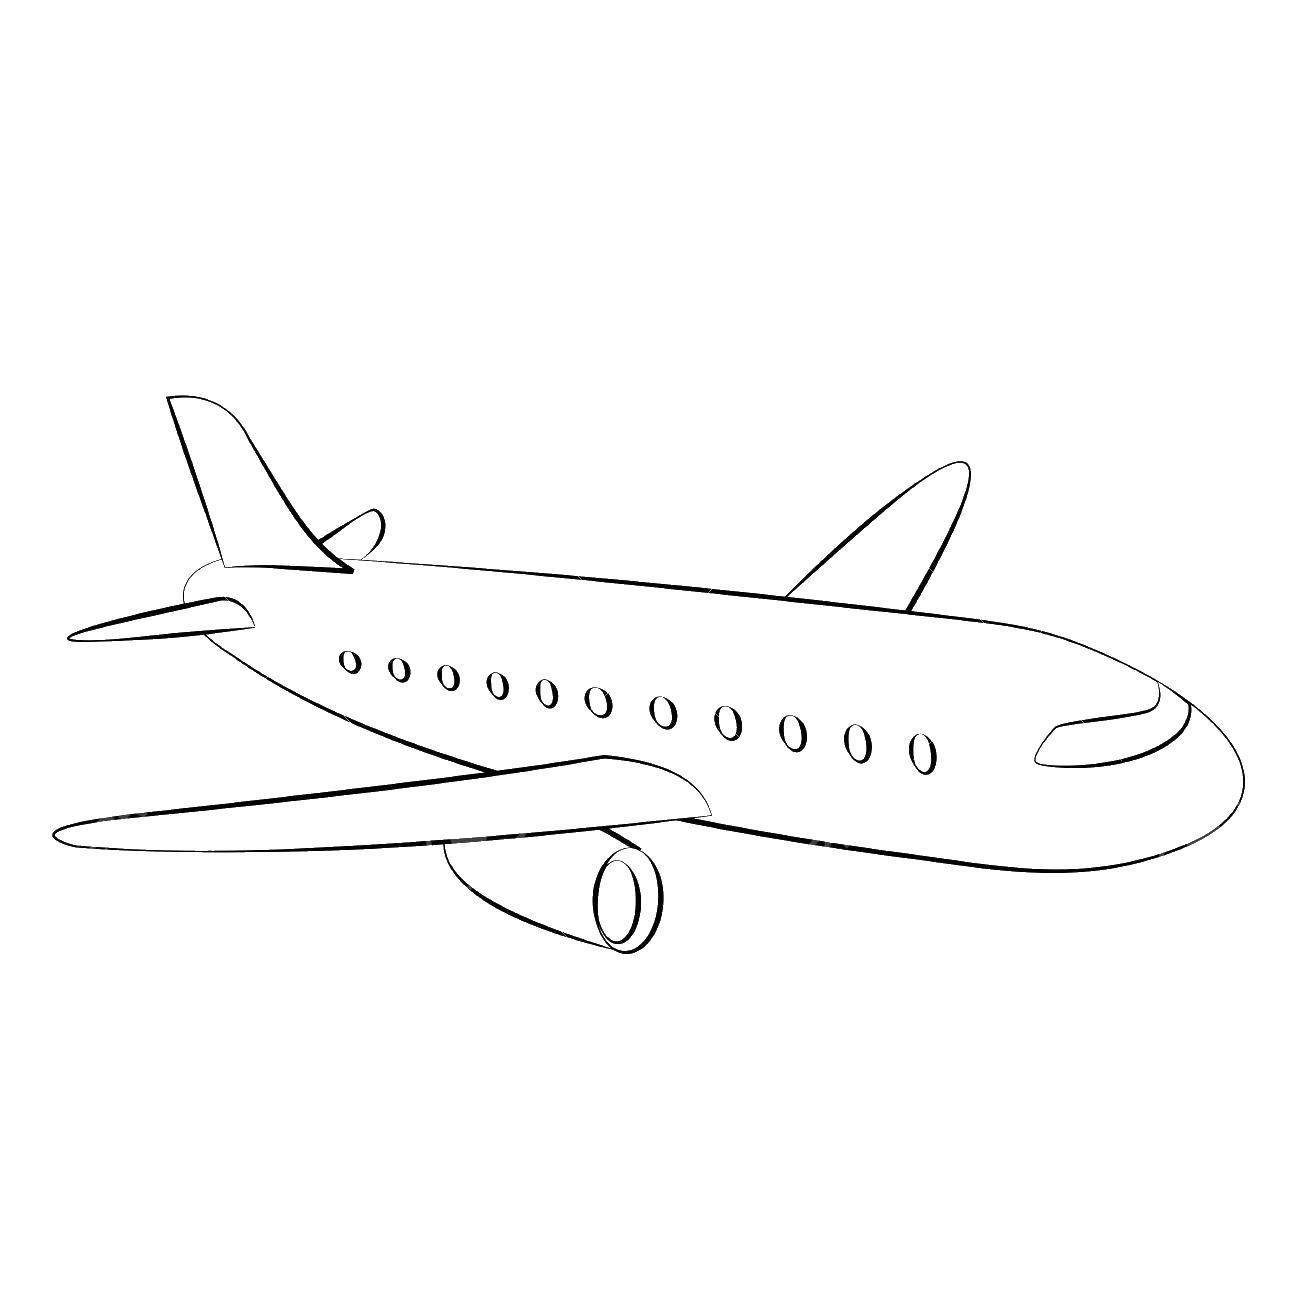 Название: Раскраска Самолет. Категория: Контур самолета. Теги: самолет.